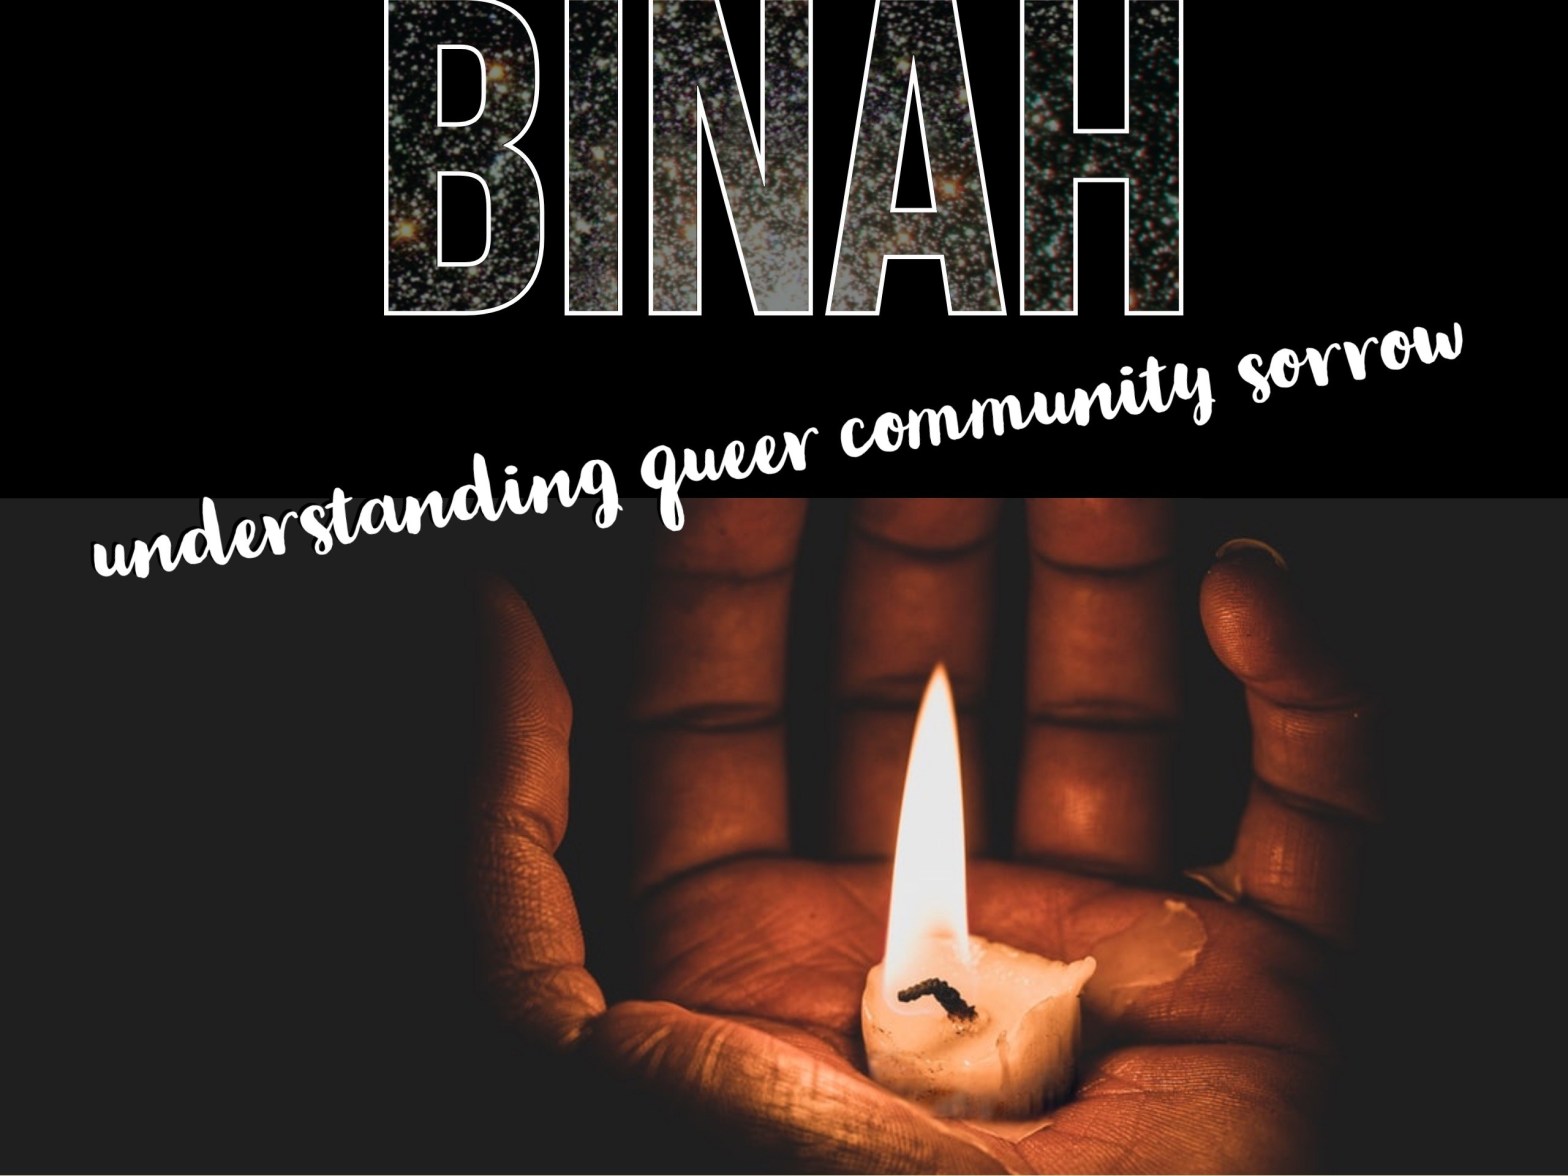 Binah: Understanding queer community sorrow